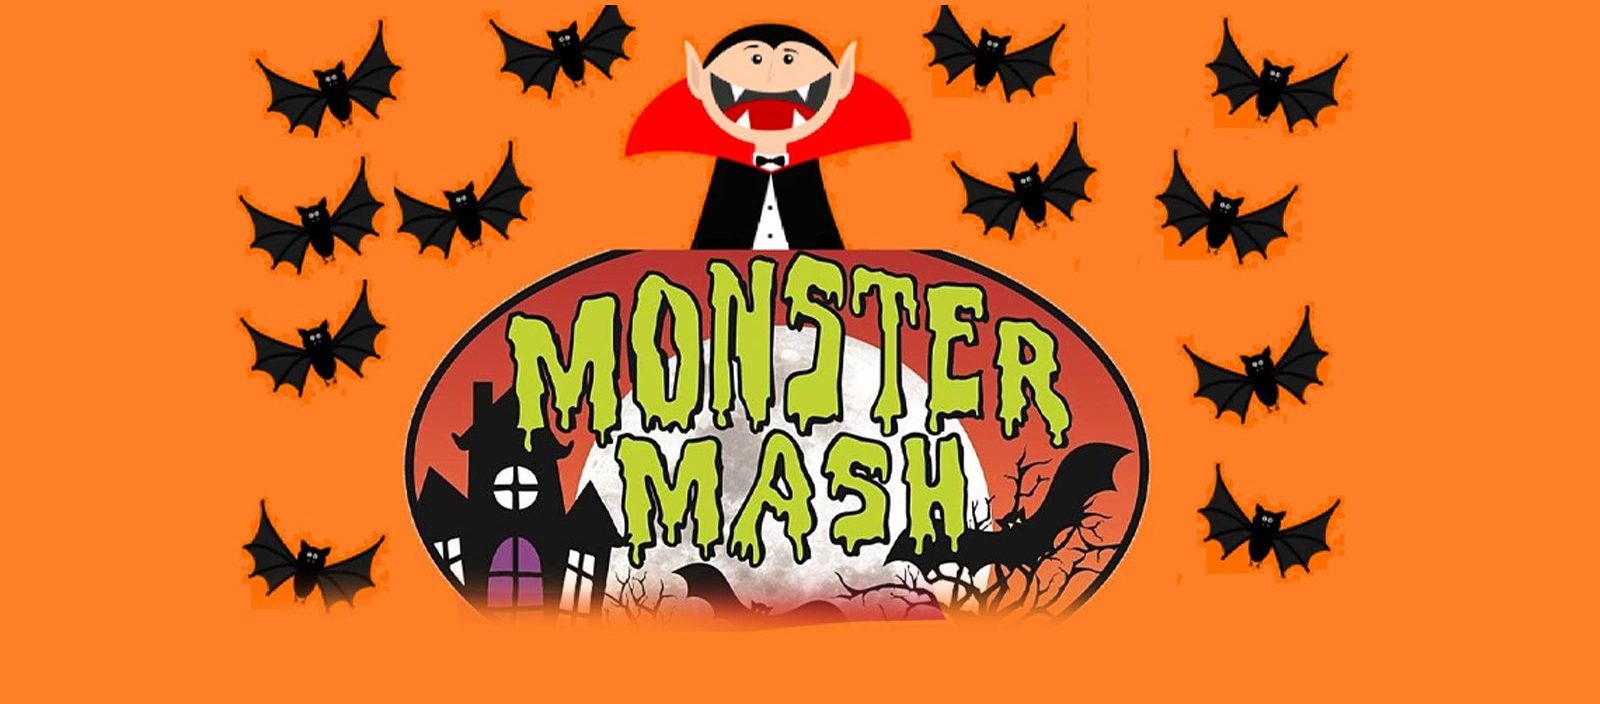 North Utica Community Center to Host a Monster Mash Halloween